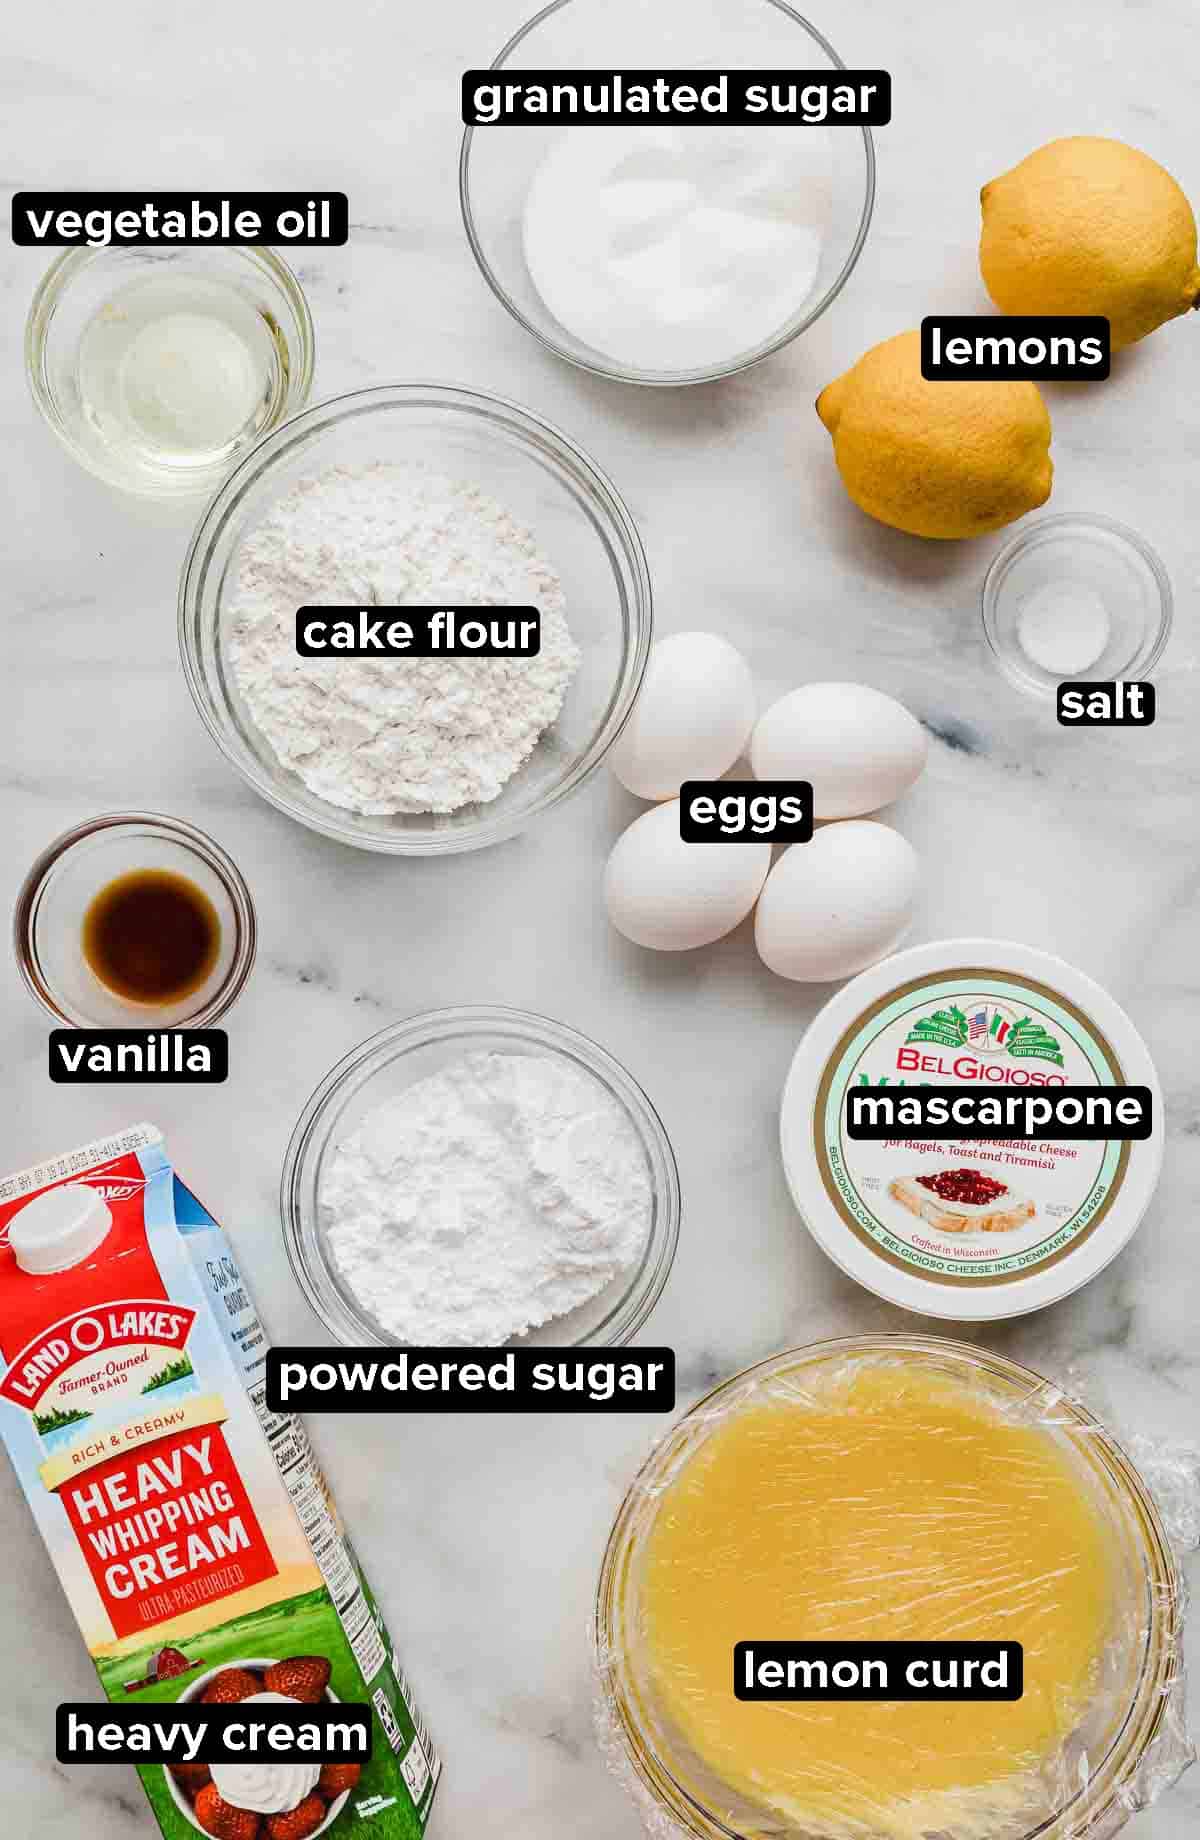 Lemon Swiss Roll ingredients on a white background: lemon curd, cake flour, lemons, sugar, eggs, vanilla, heavy cream, mascarpone cheese.